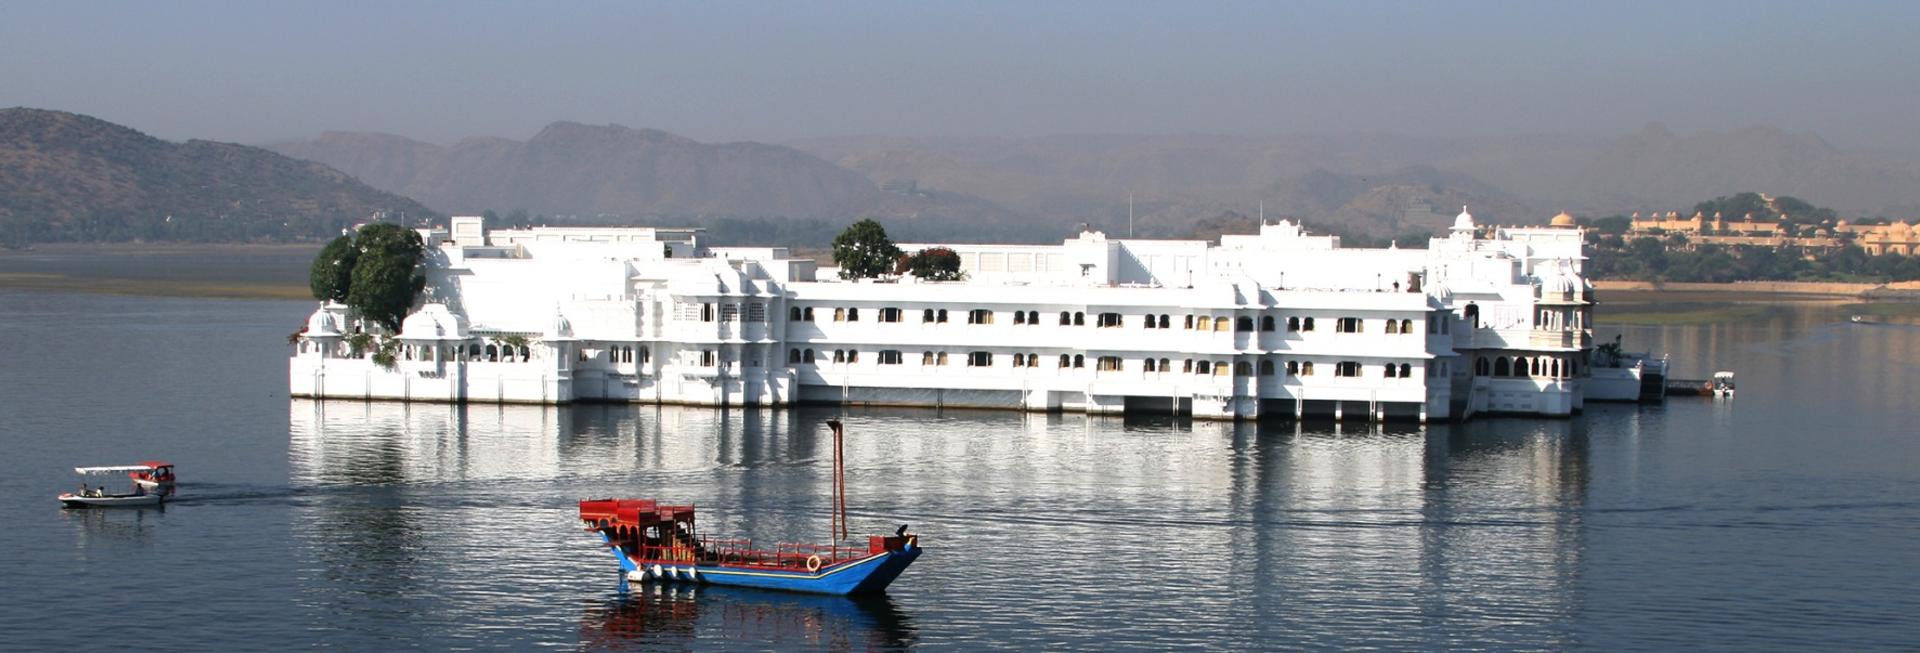 Boats on Lake Pichola, Udaipur, Rajasthan